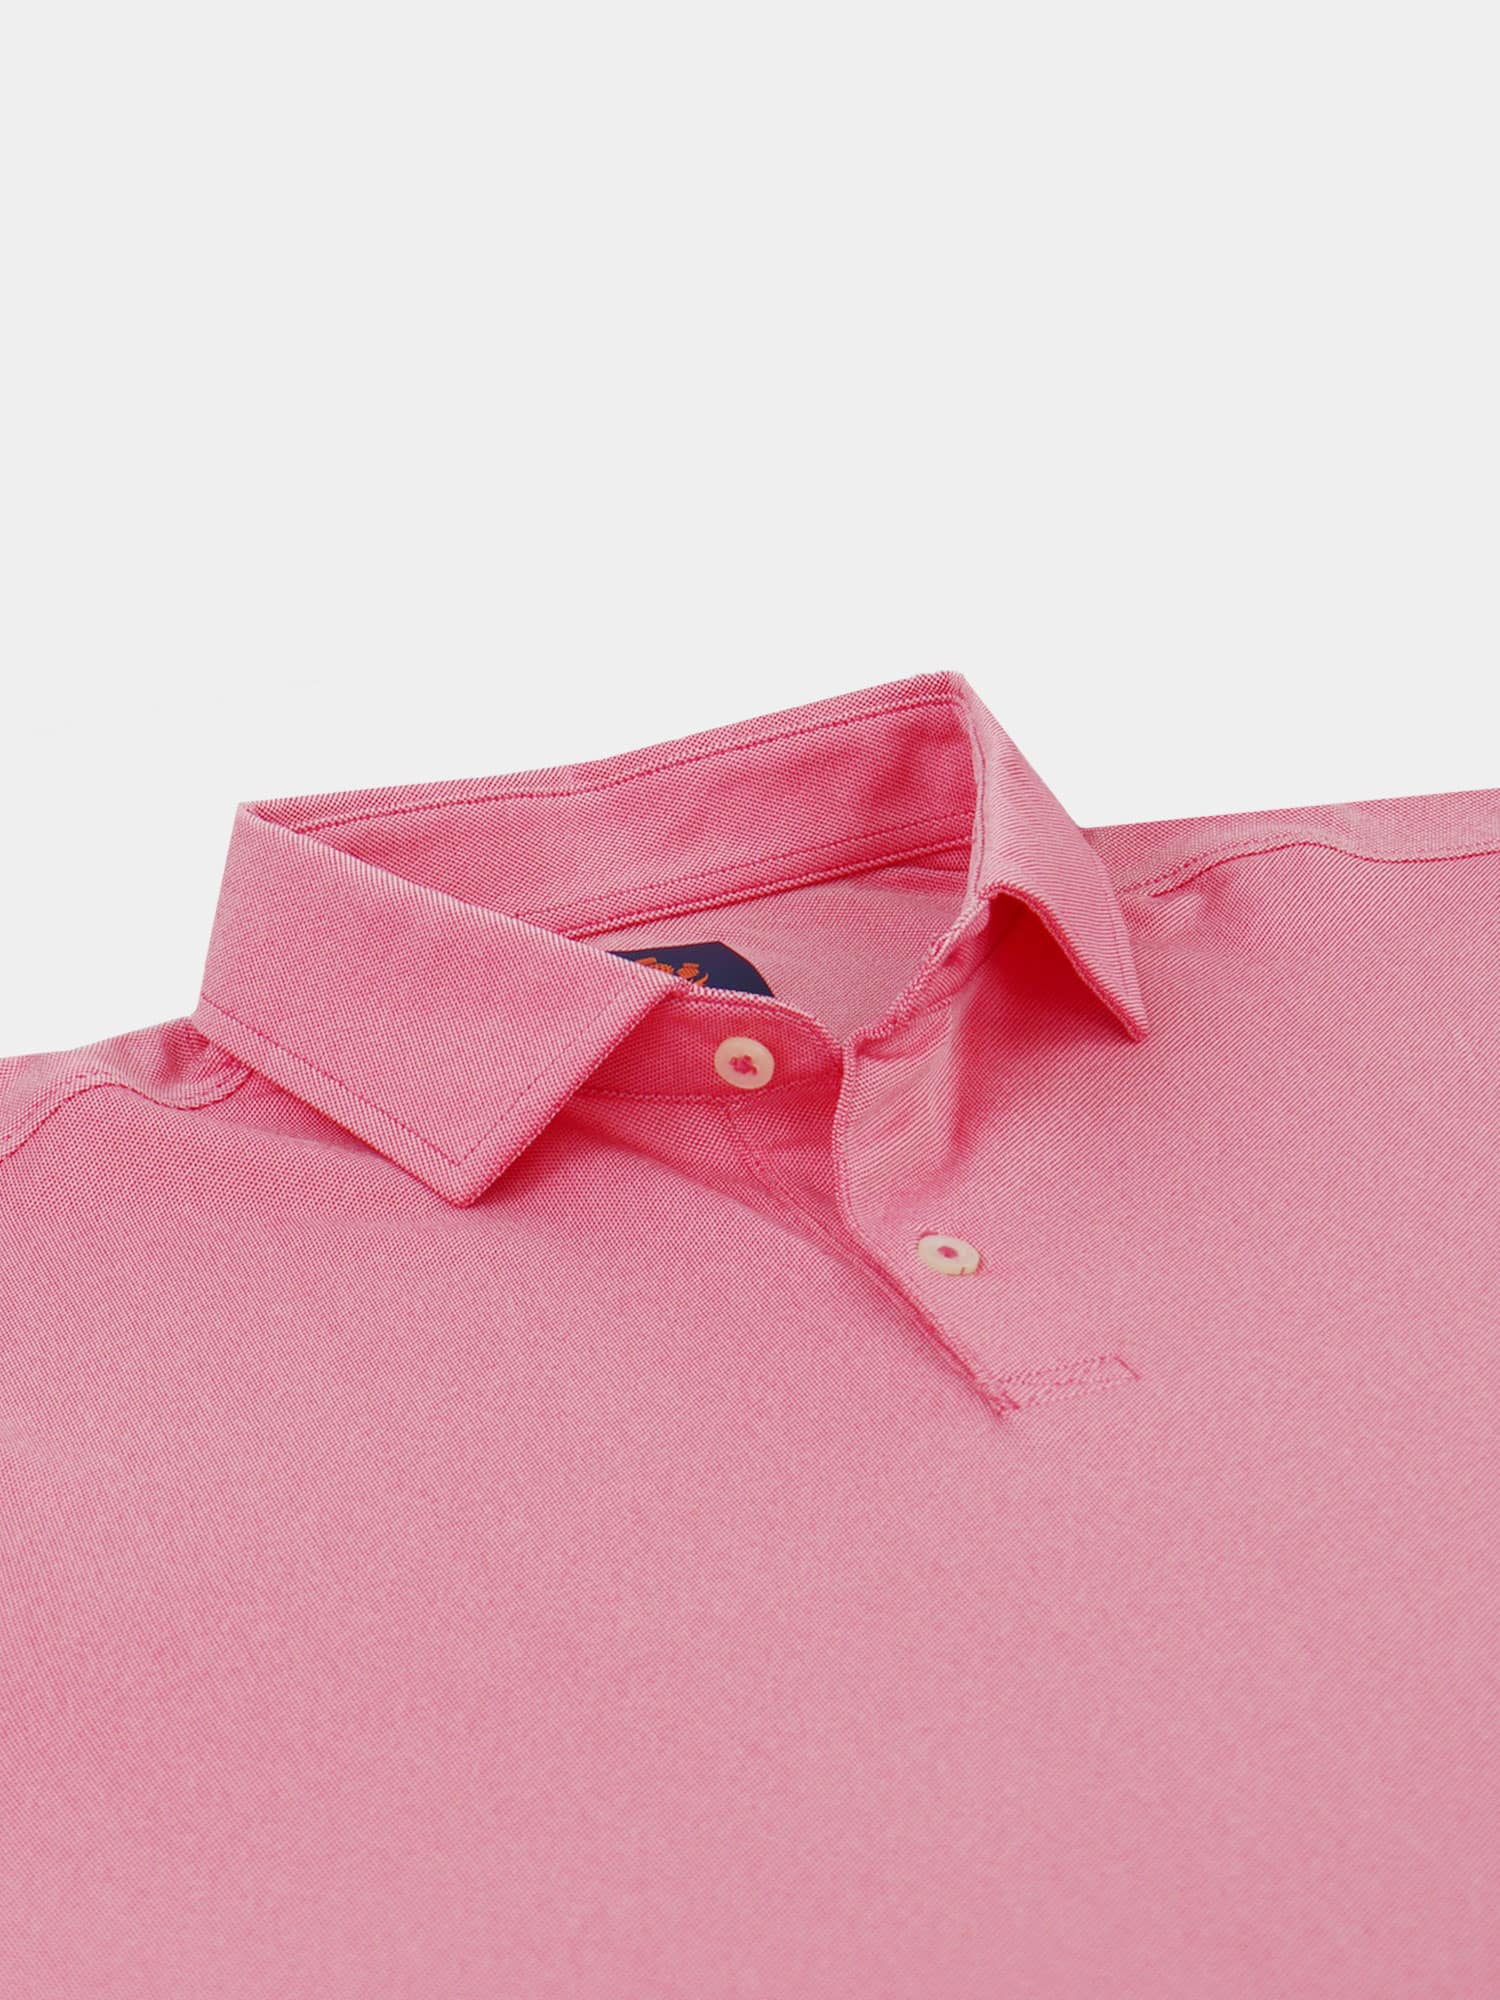 Lacoste Men's Sport Short Sleeve Jacquard Techincal Polo Shirt